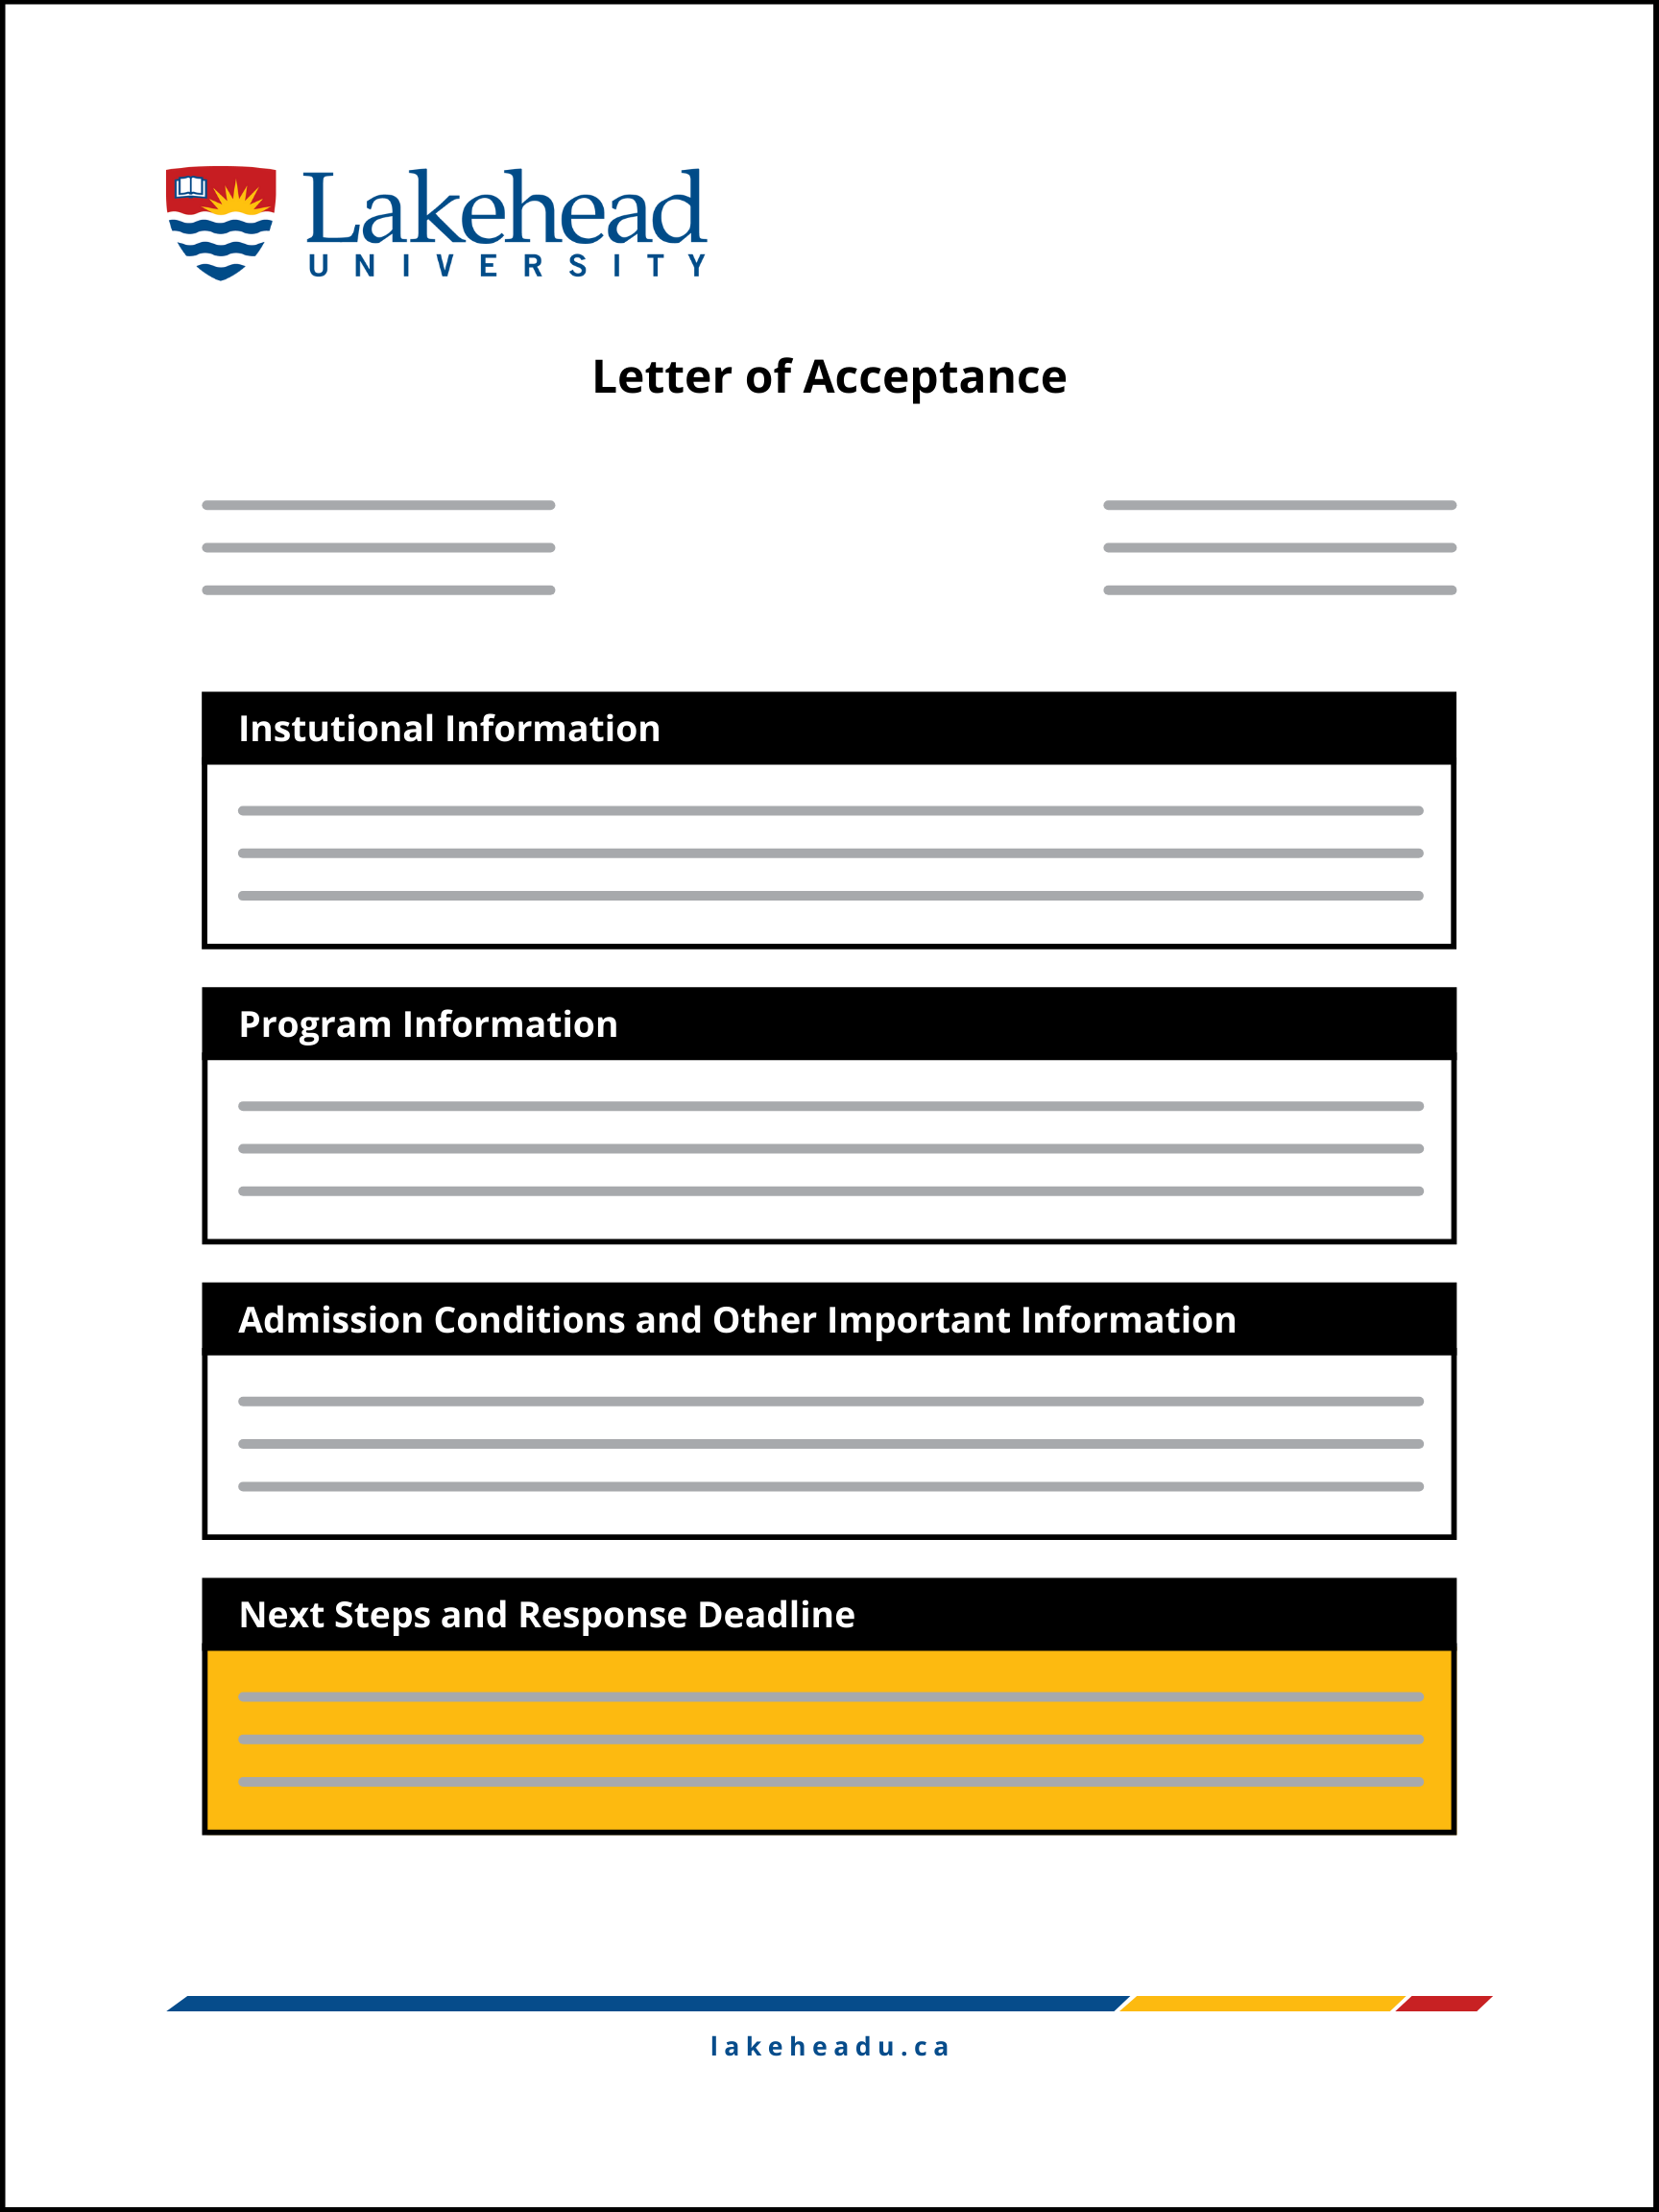 Letter of Acceptance - next steps